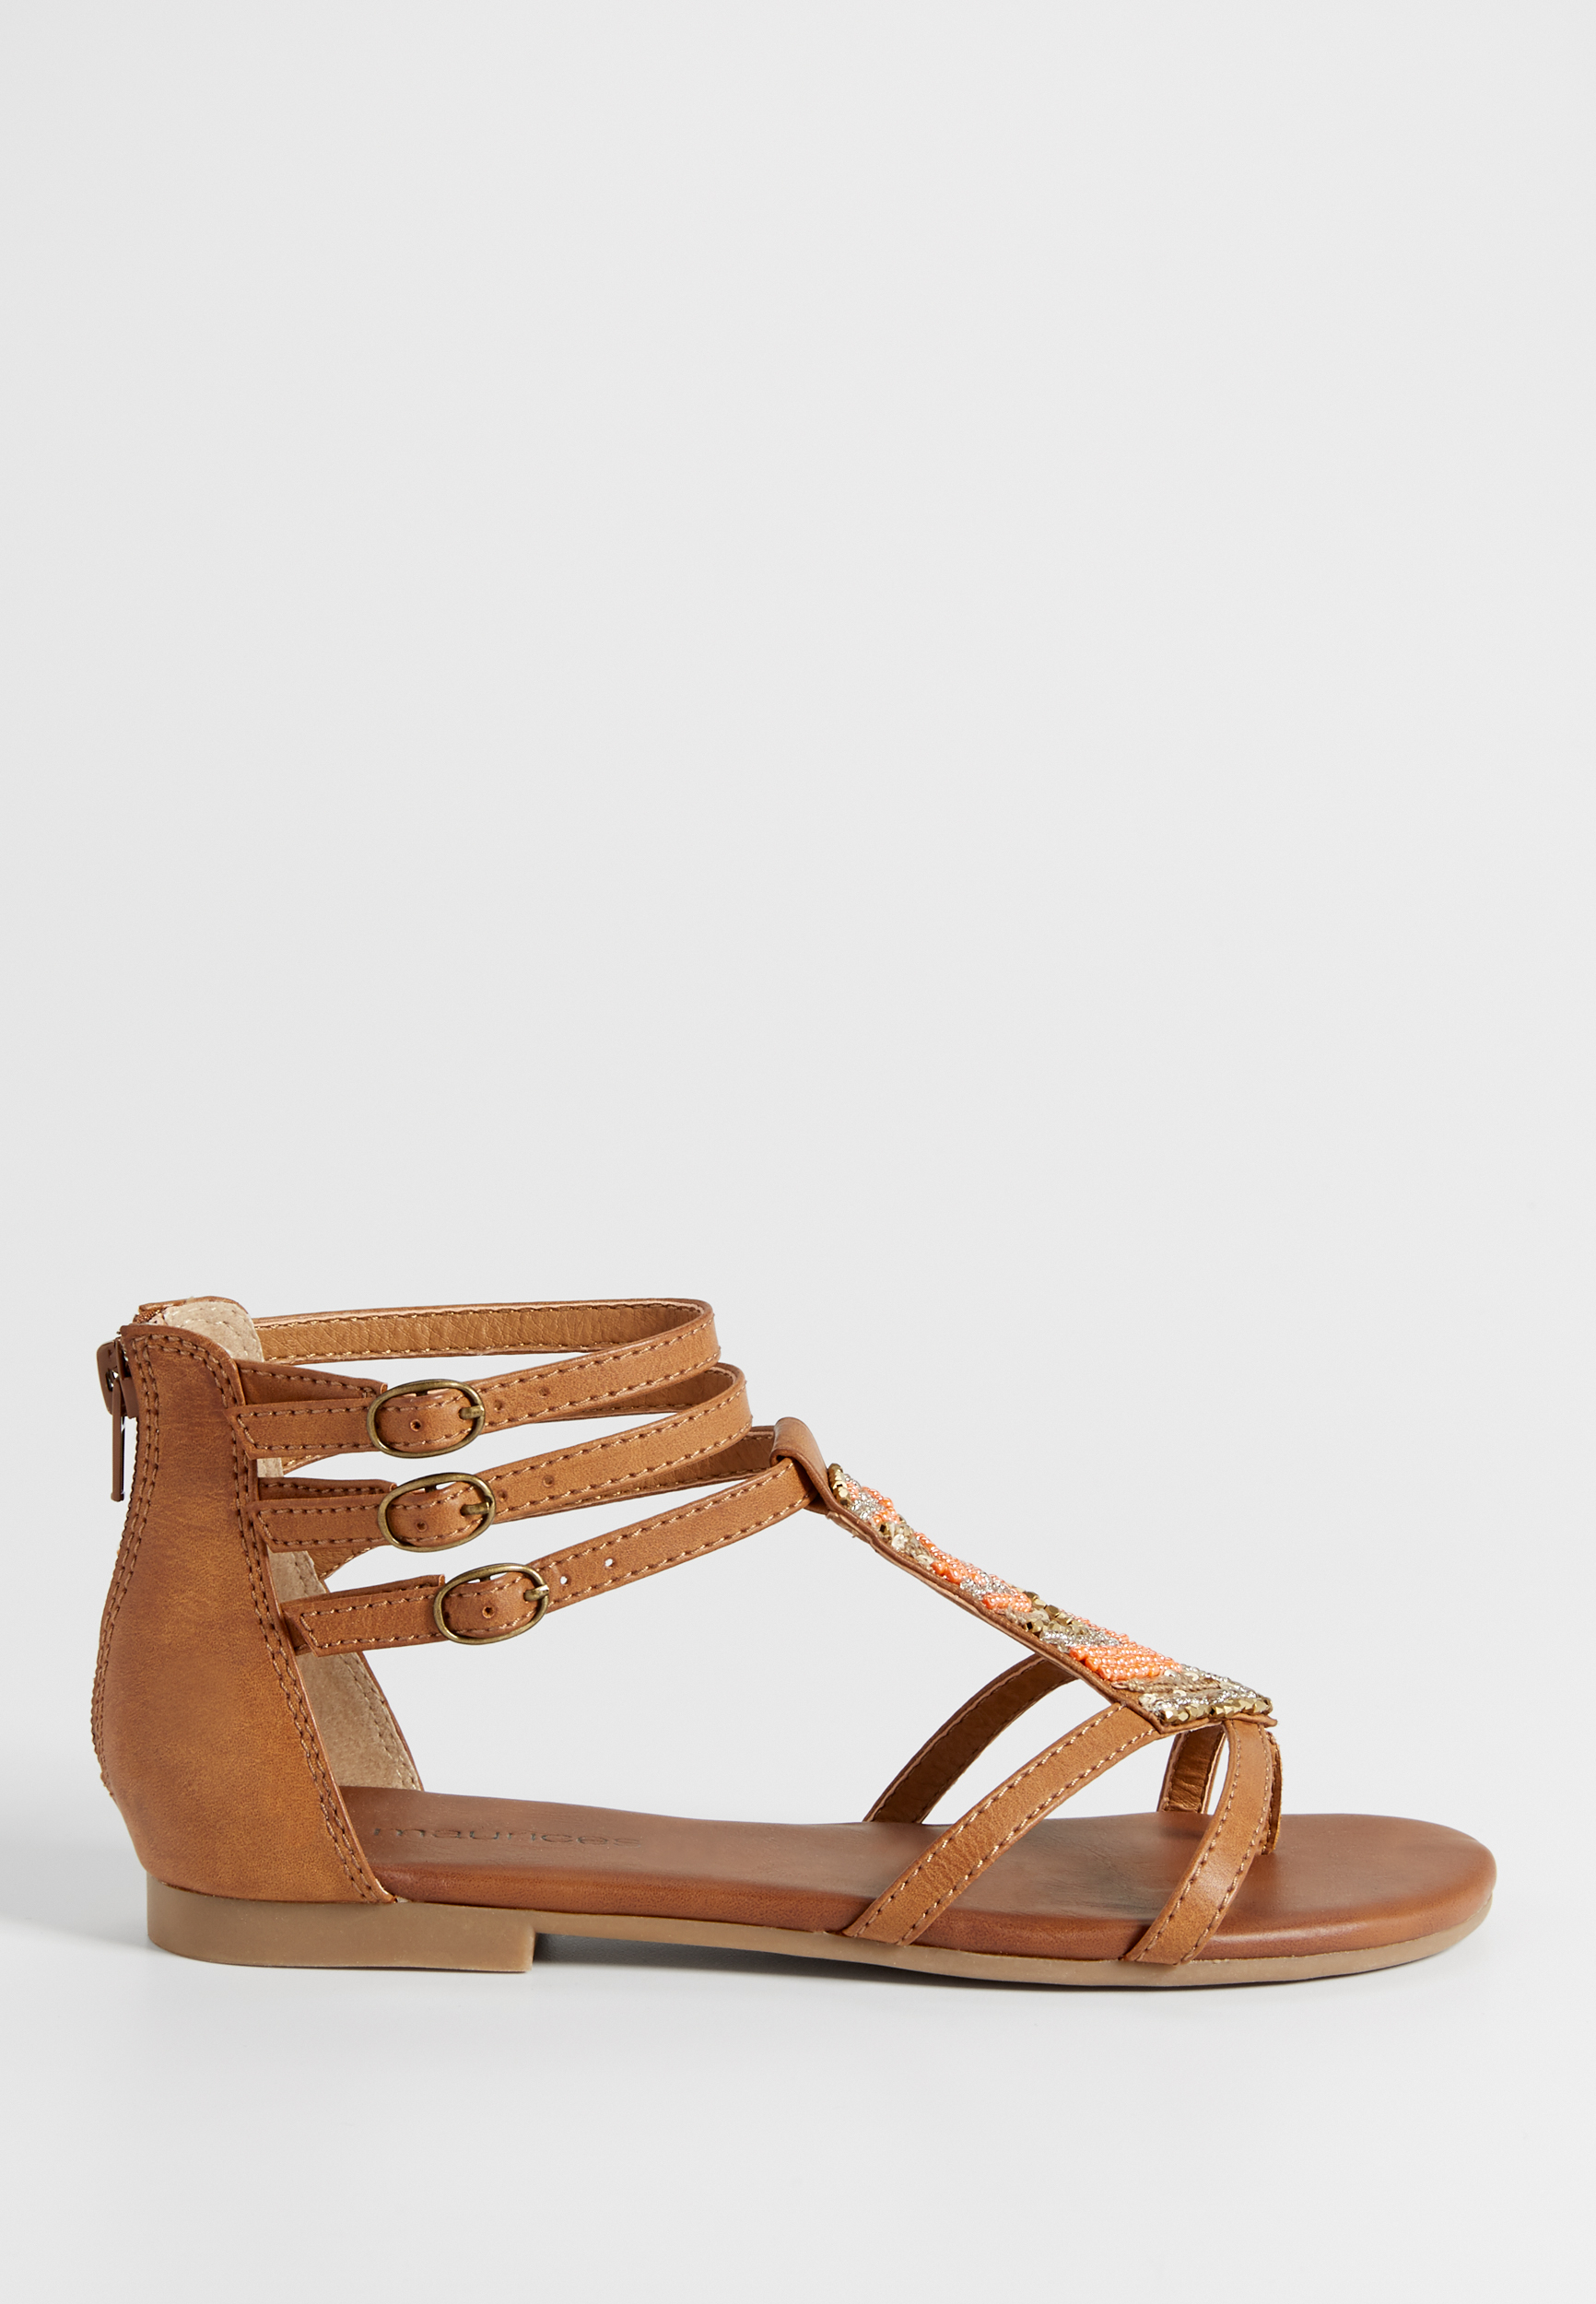 Bellina embellished gladiator sandal in coral combo | maurices